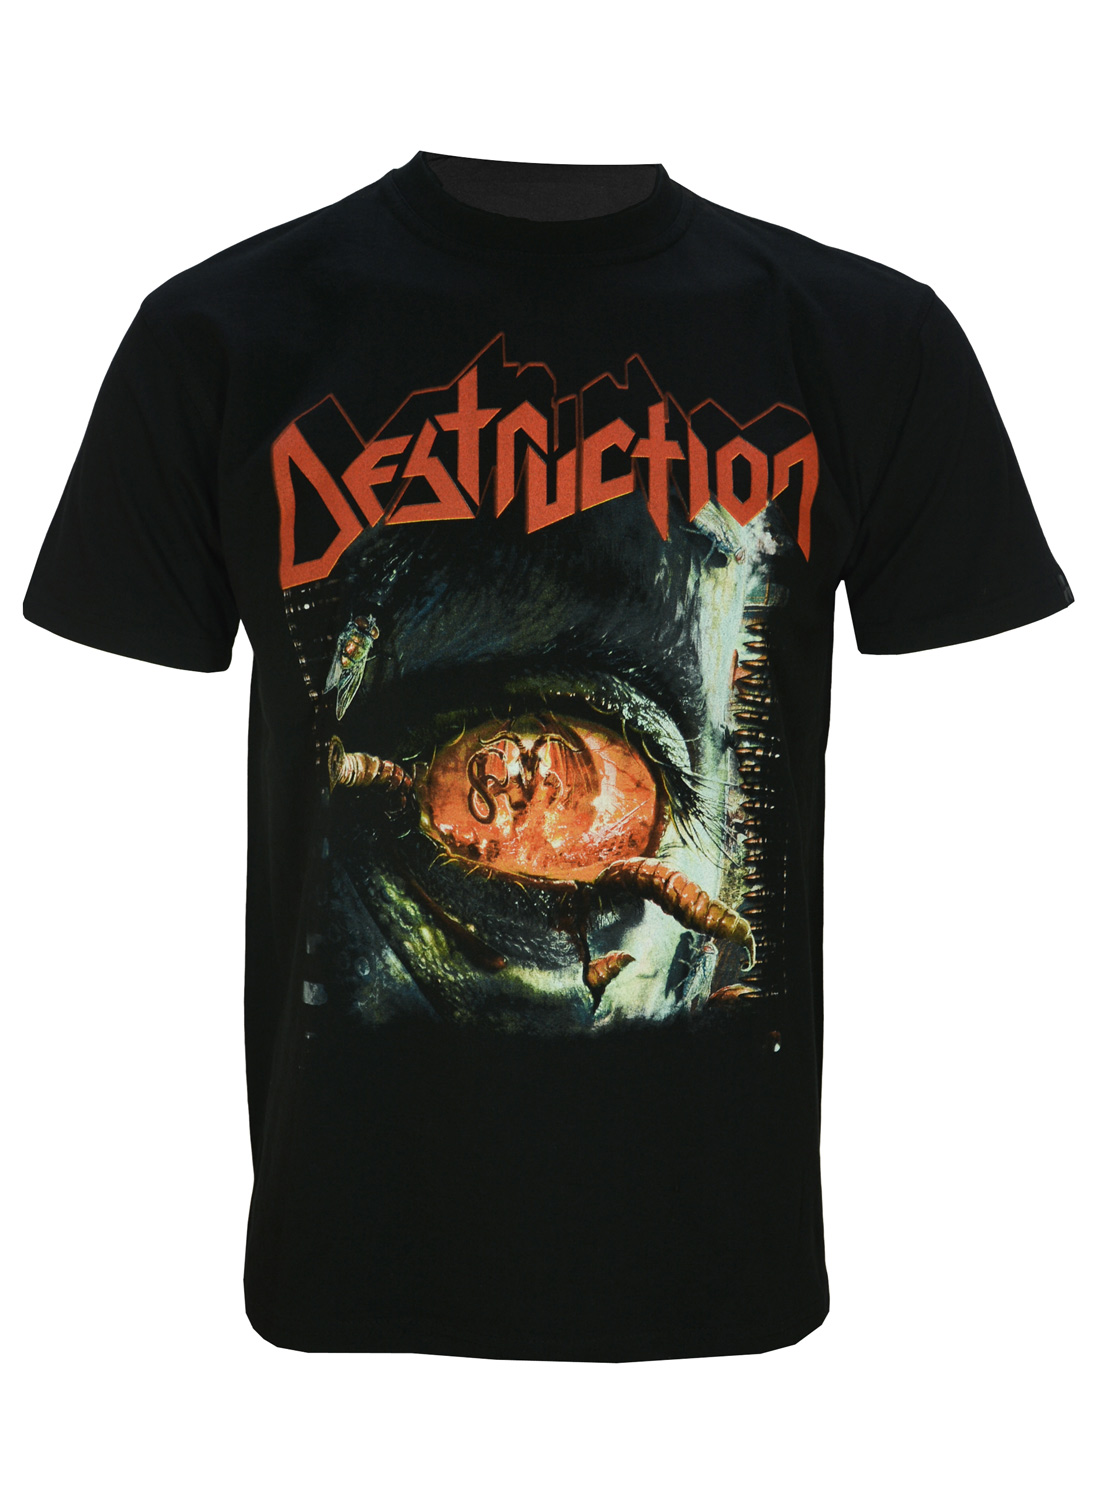 Destruction Day of reckoning T-shirt